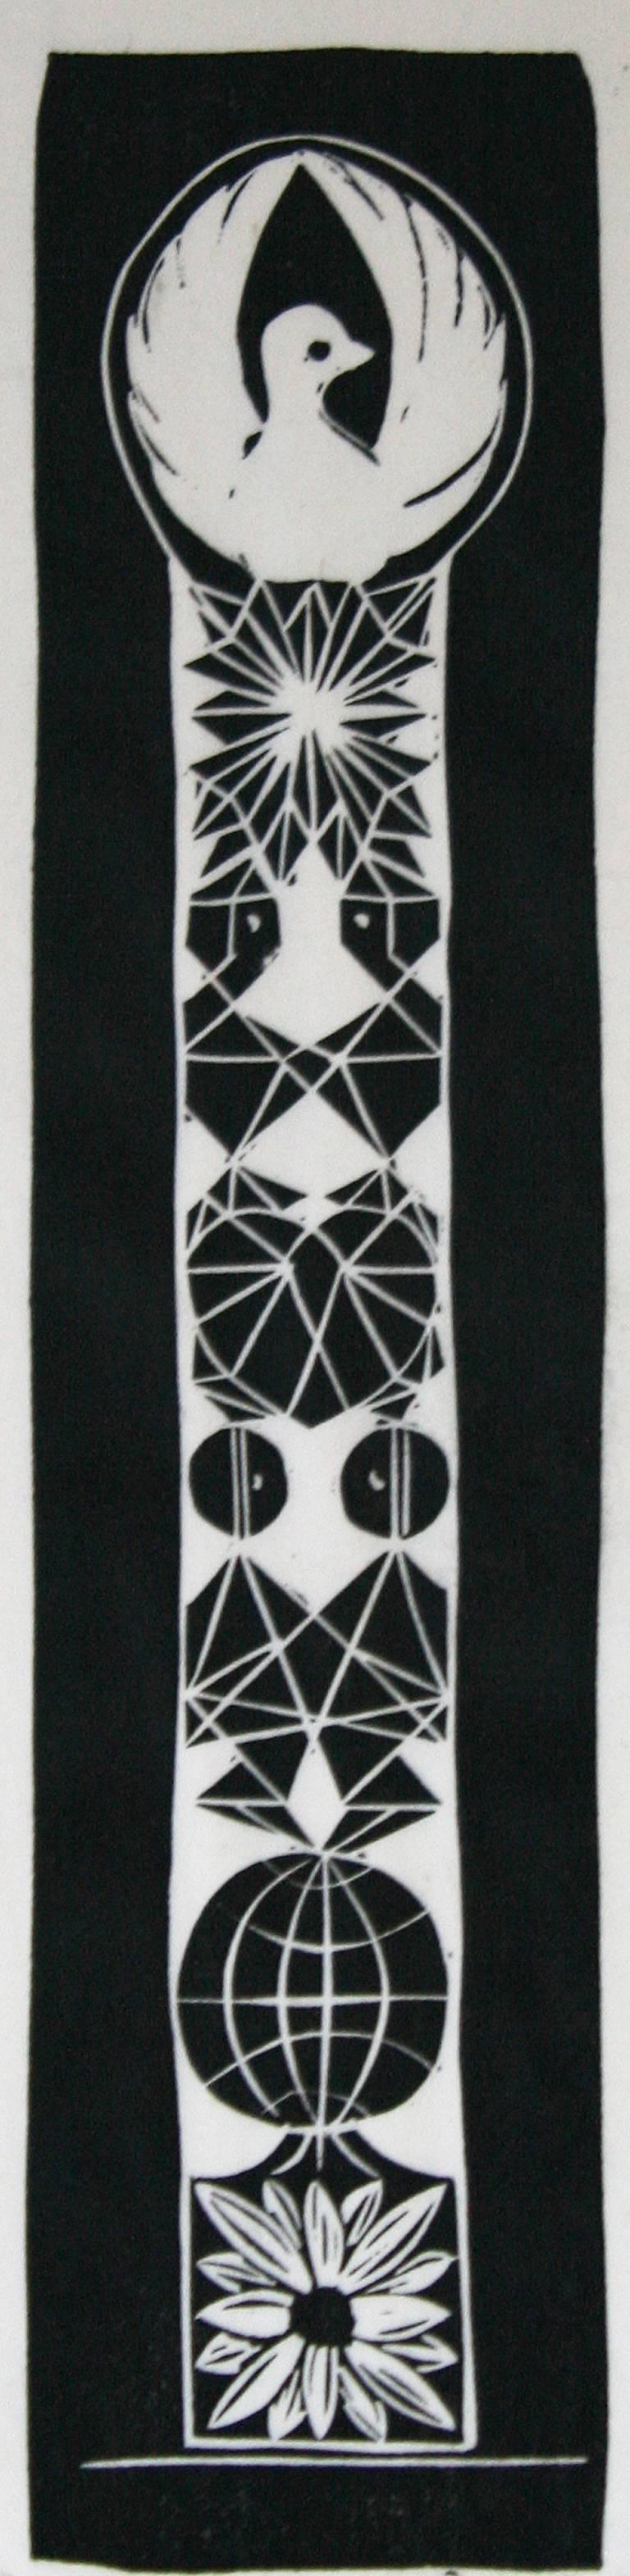 Jane Martin VonBosse Abstract Print - Peace Totem